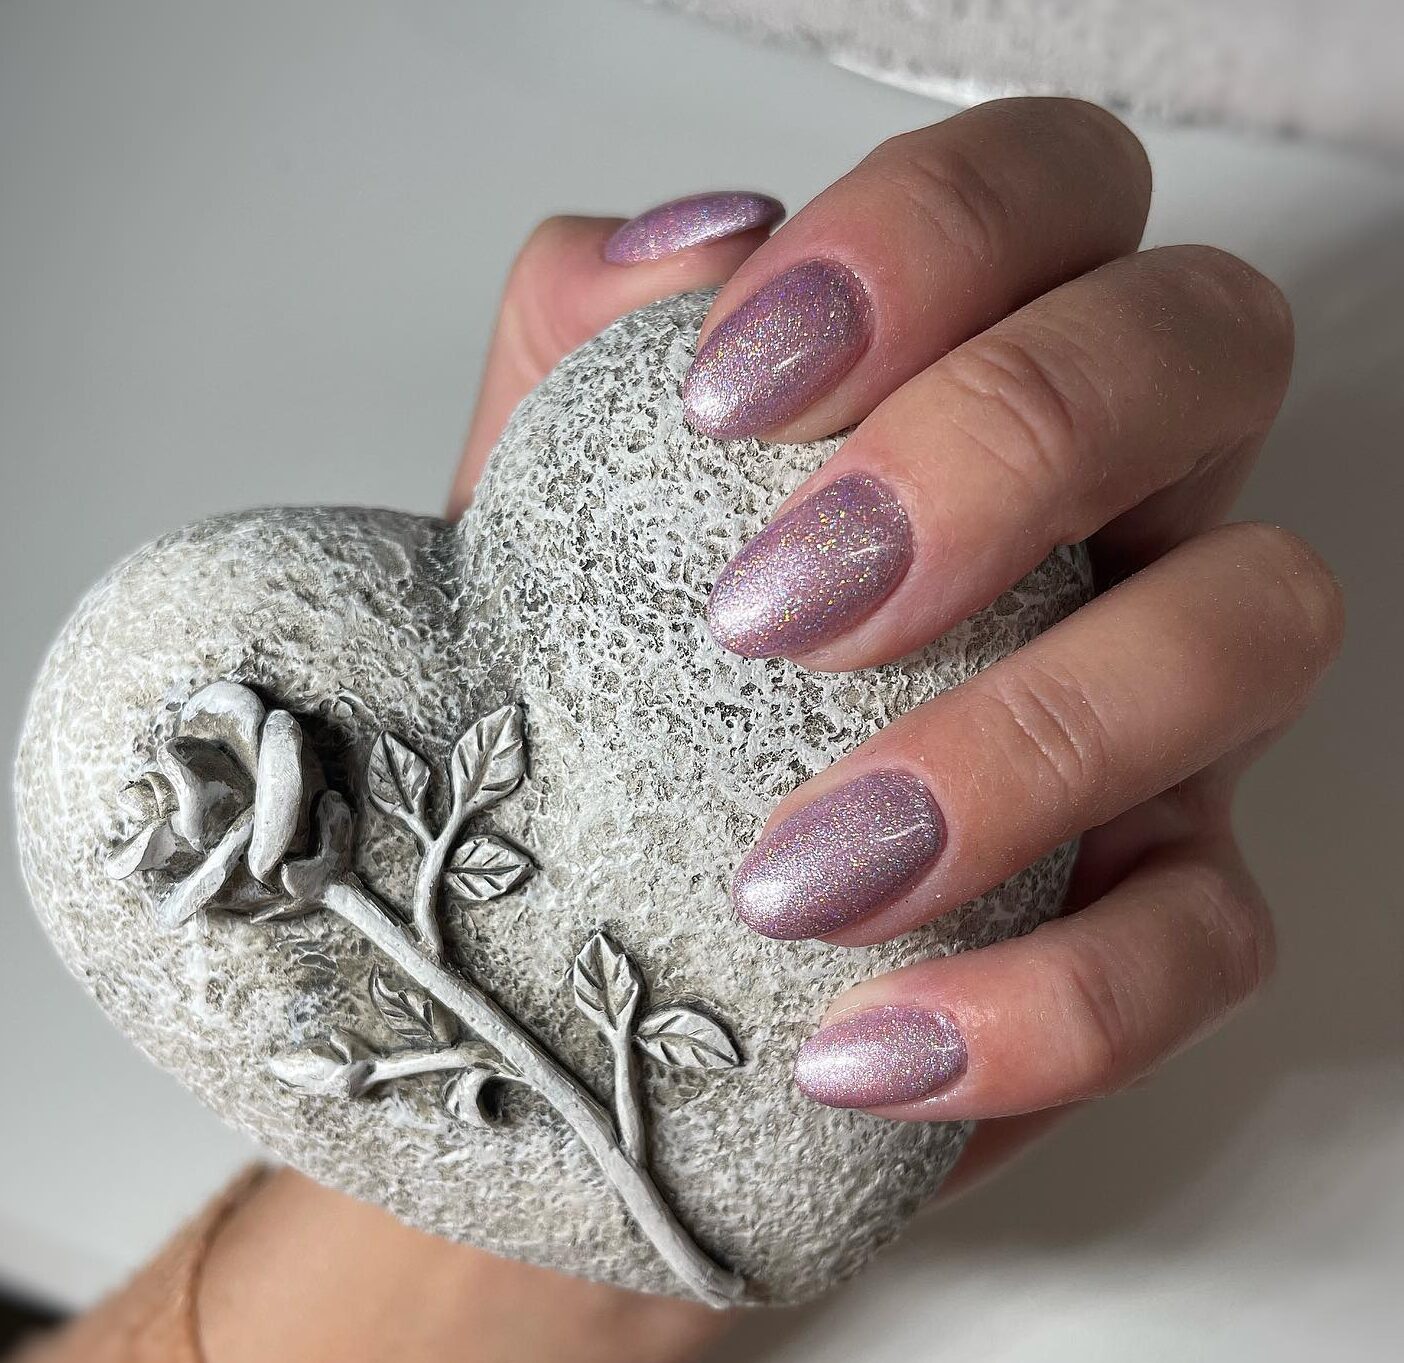 Light pink glittery nail polish on short round nails